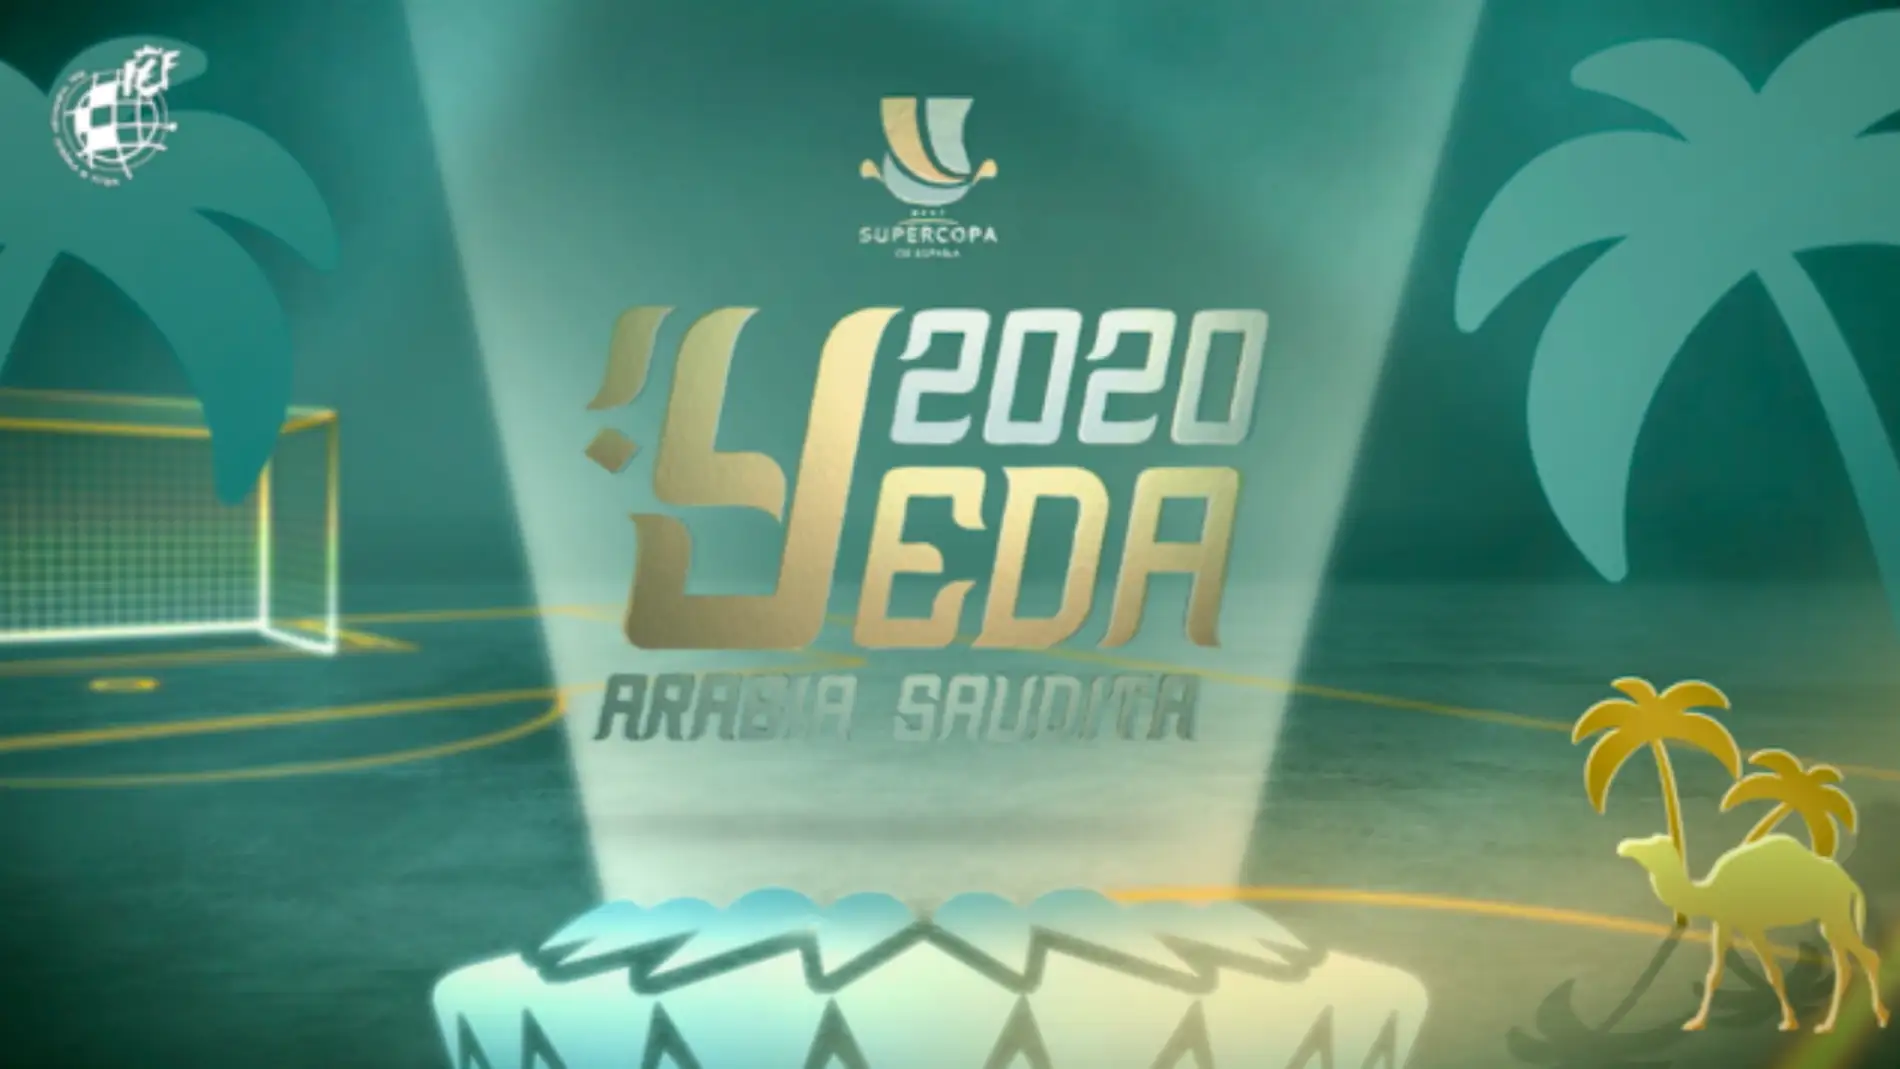 Supercopa 2020 en Yeda